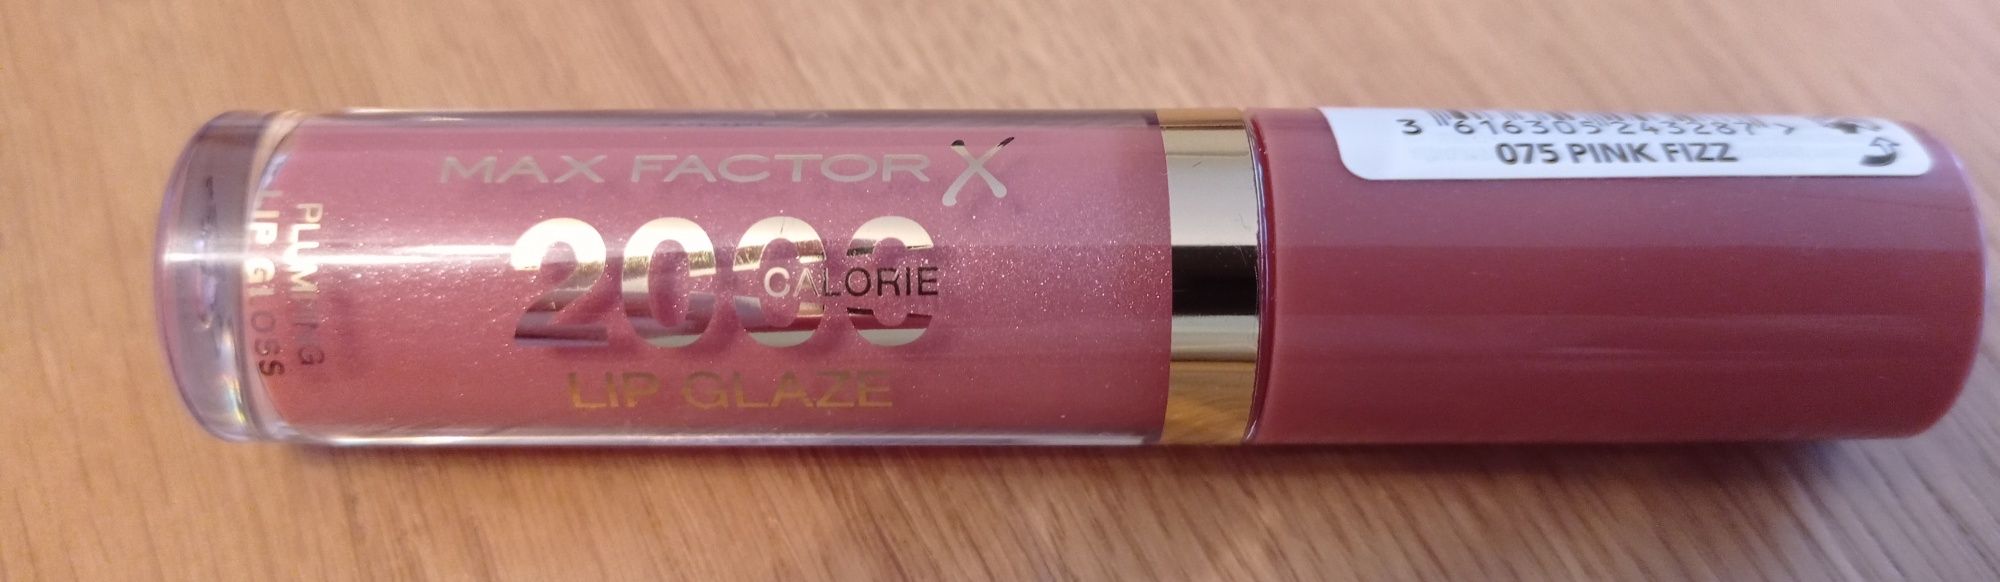 Max Factor 2000calorie Lip Glaze błyszczyk 075 pink fizz